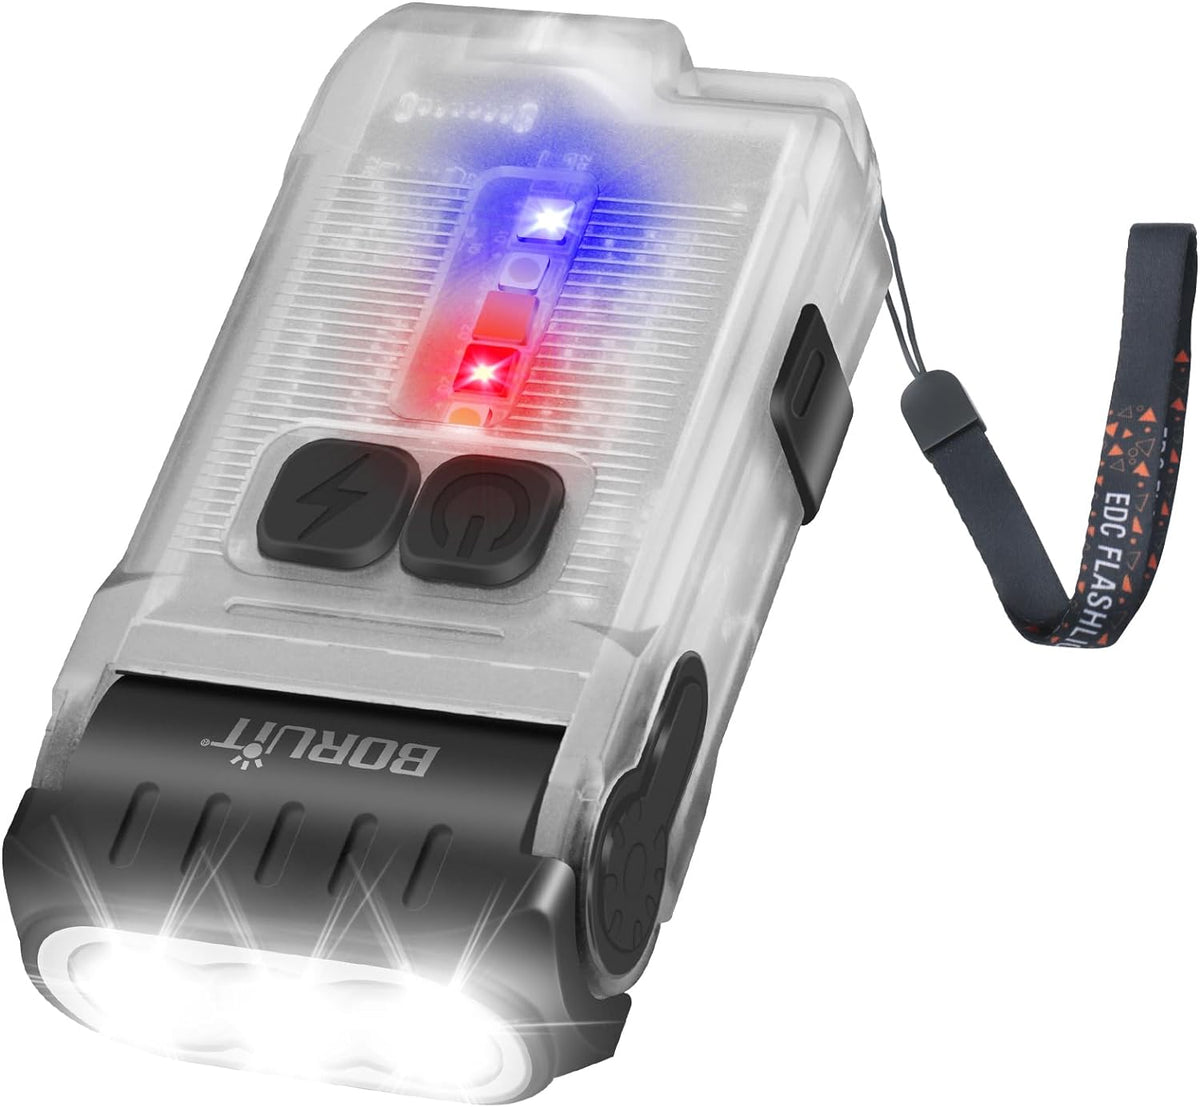 (⭐⭐ HOT SALE NOW) Small Flashlight Powerful 1200 Lumen with 80° Swivel Head